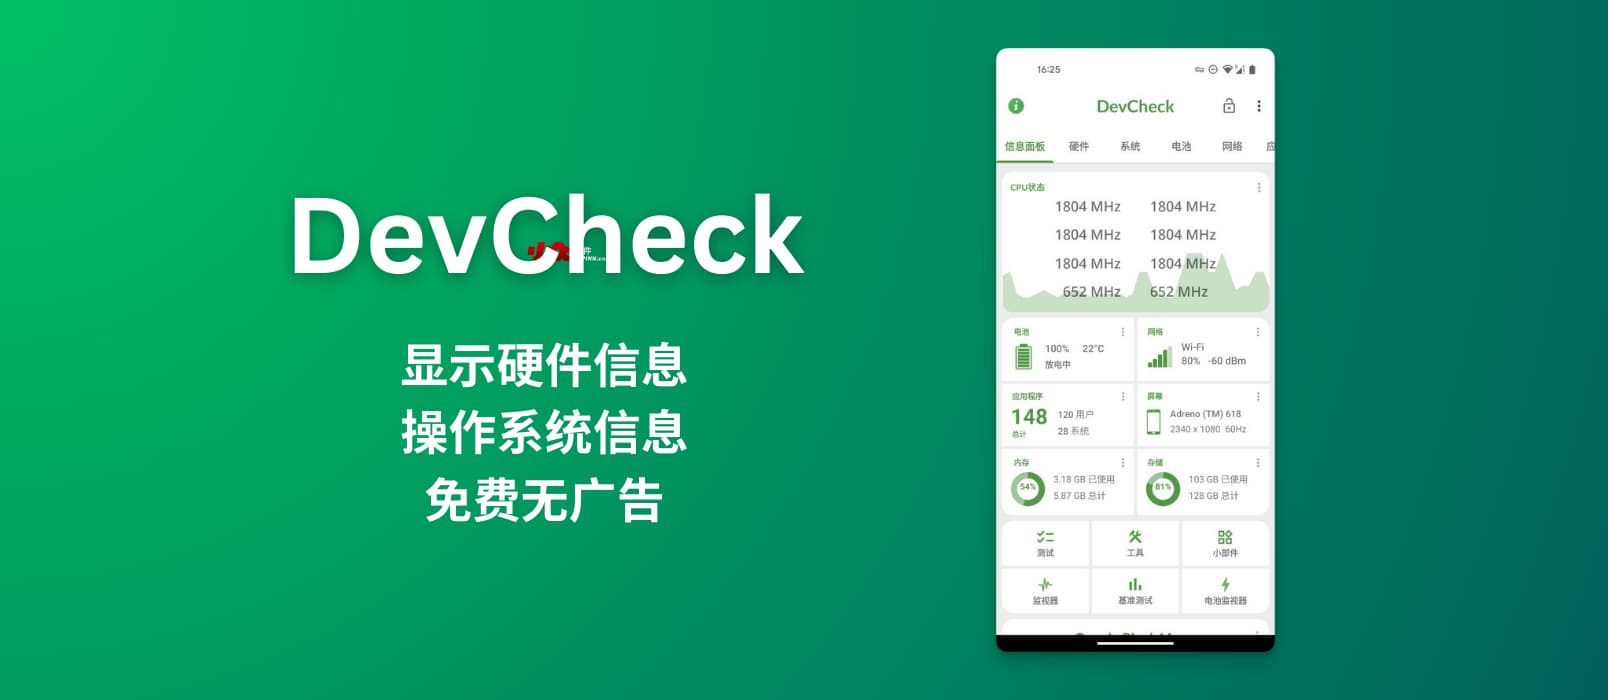 DevCheck - 实时显示 Android 设备硬件、操作系统信息，免费无广告 1